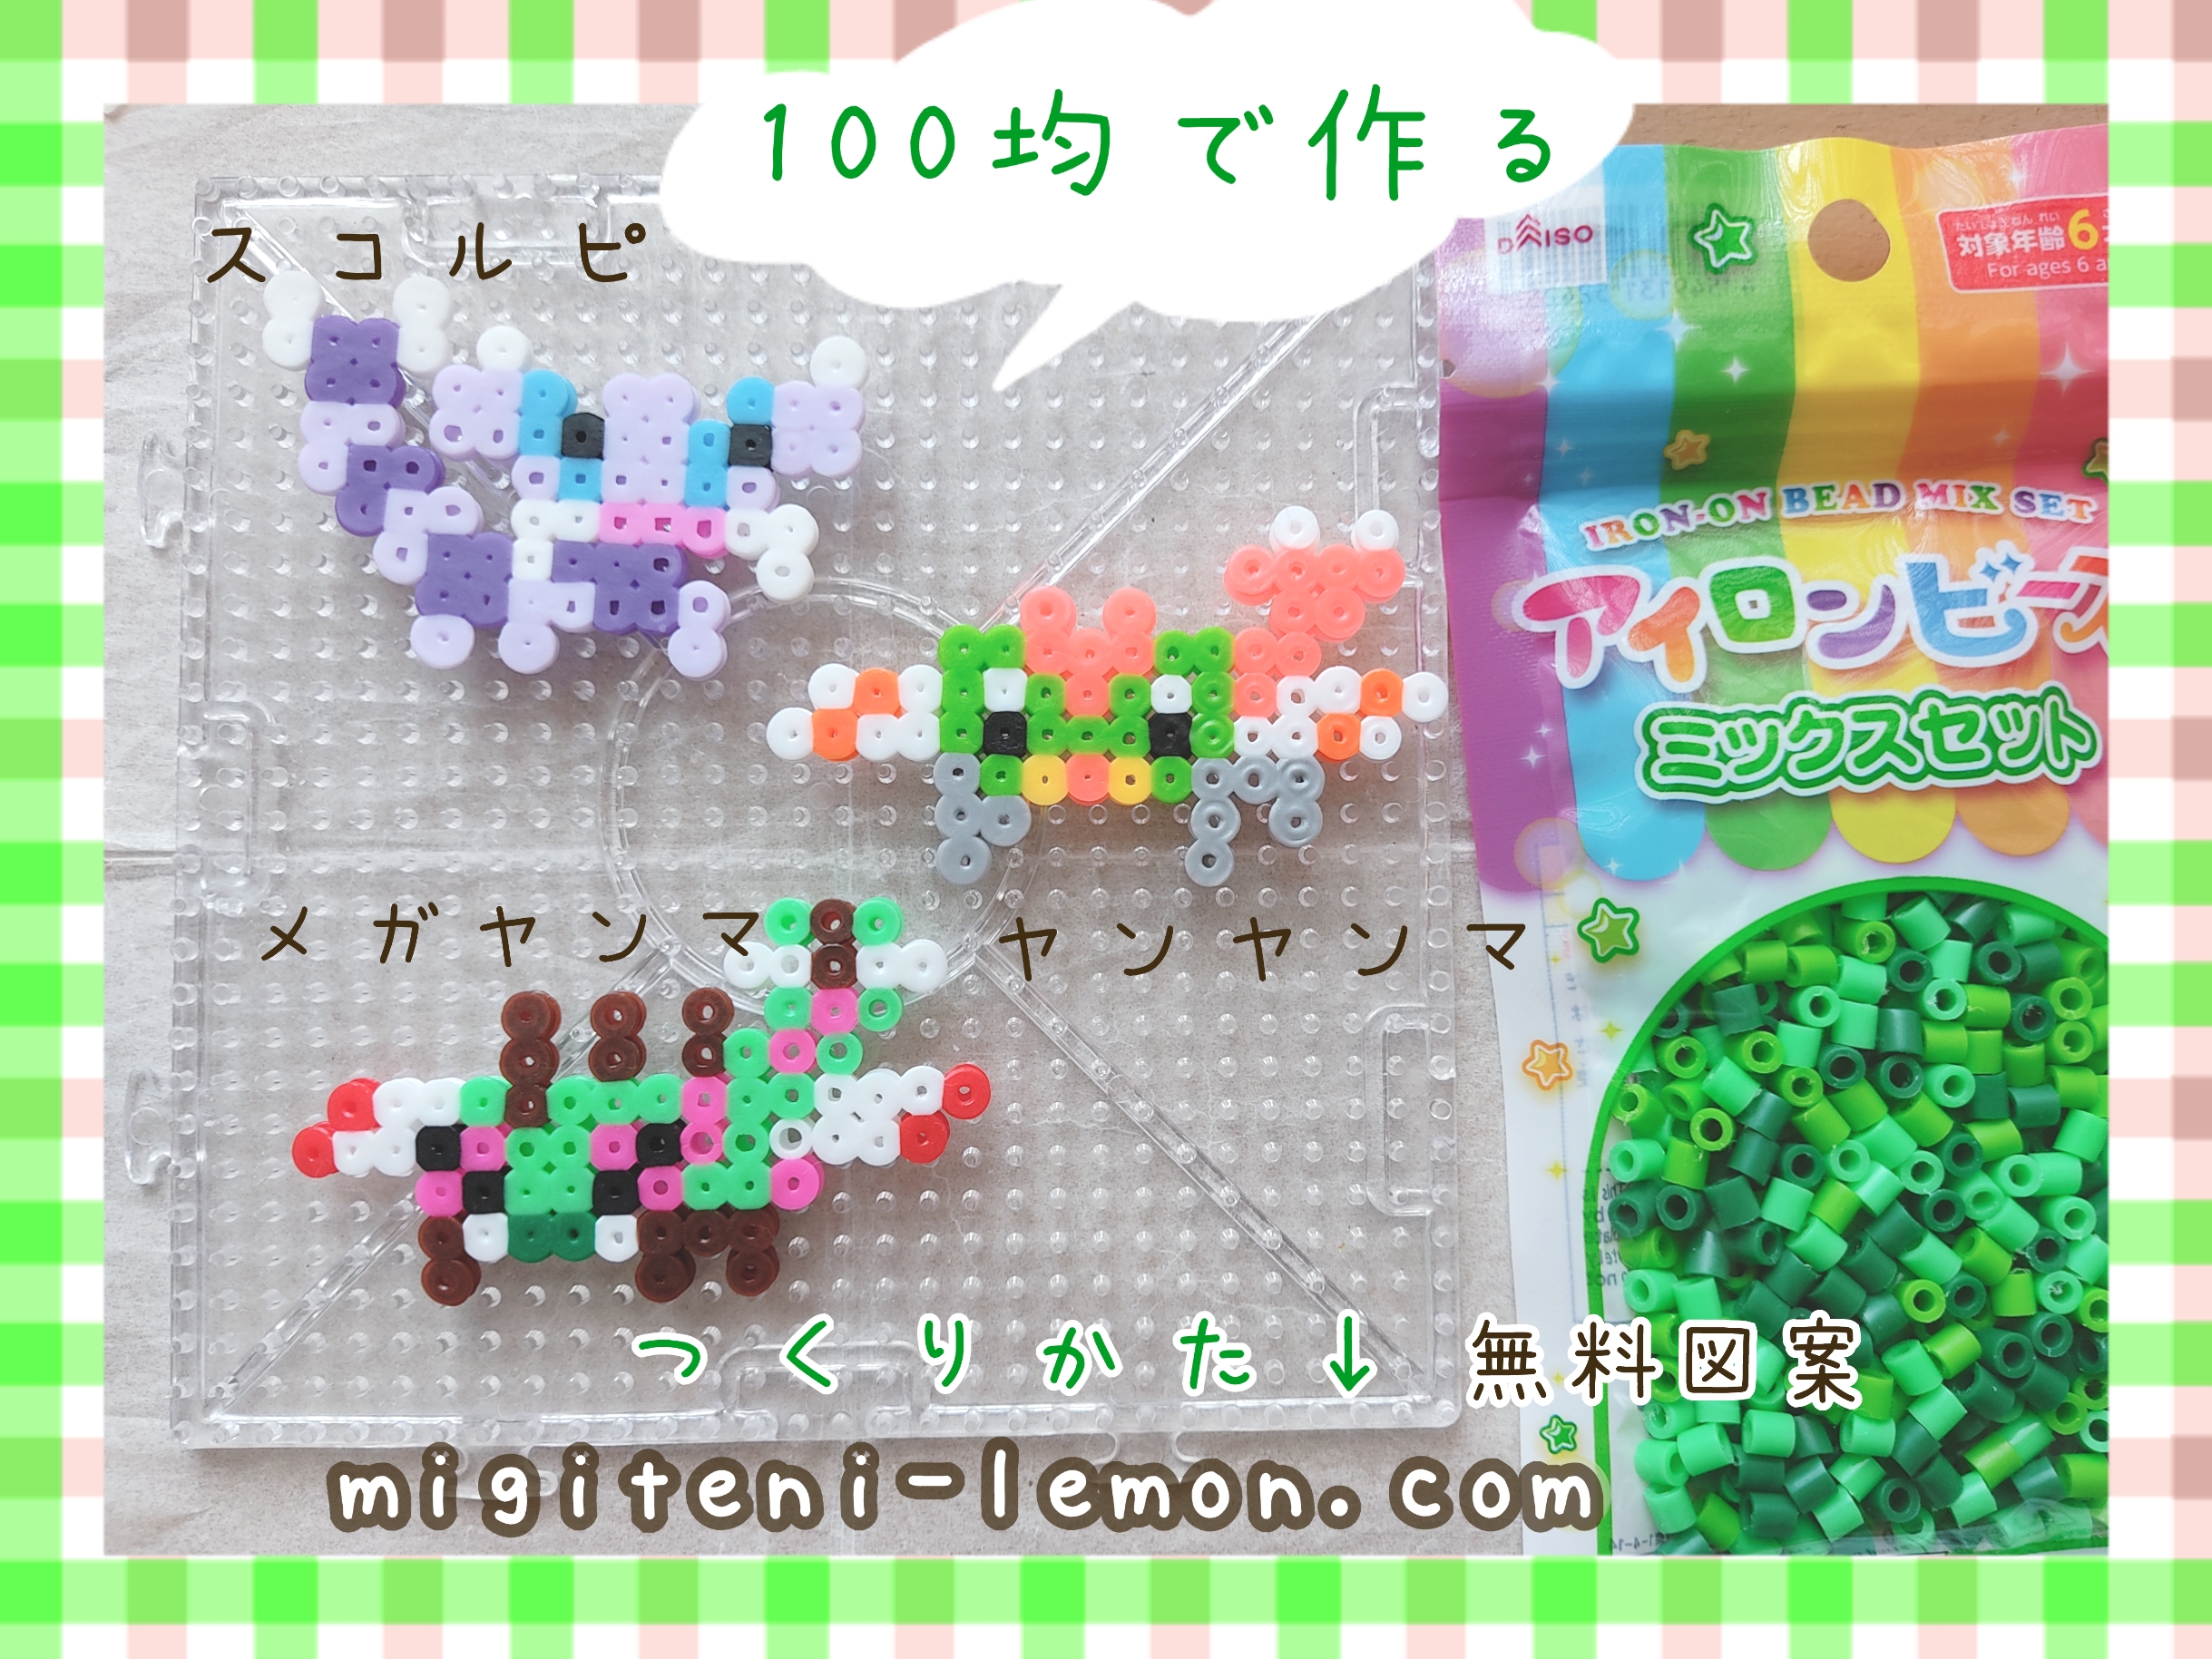 yanyanma-yanma-megayanma-yanmega-pokemon-iron-beads-handmade-daiso-small-square-free-zuan-tonbo-kids-kawaii-100kin